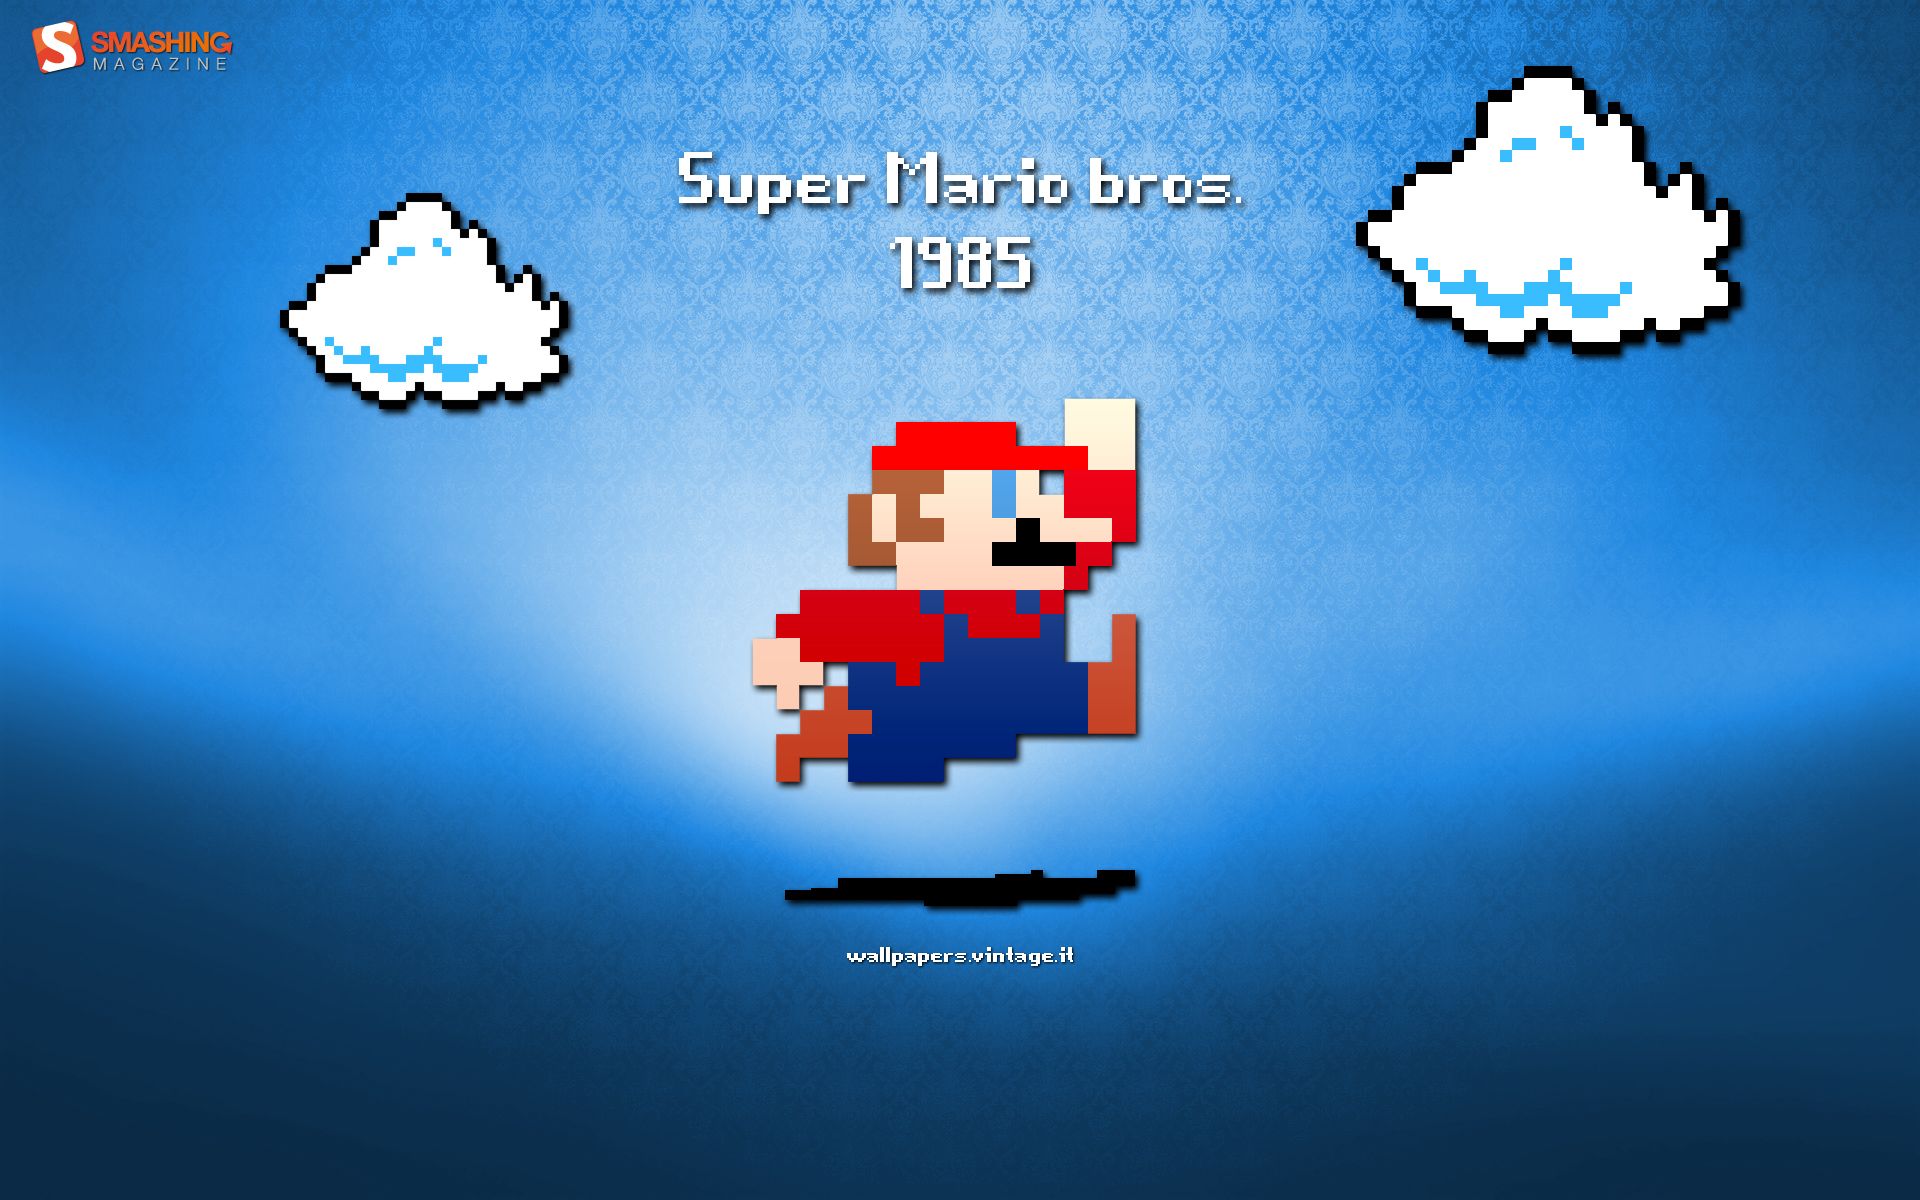 Super Mario bros. 1985 wallpaper - Free Desktop HD iPad iPhone